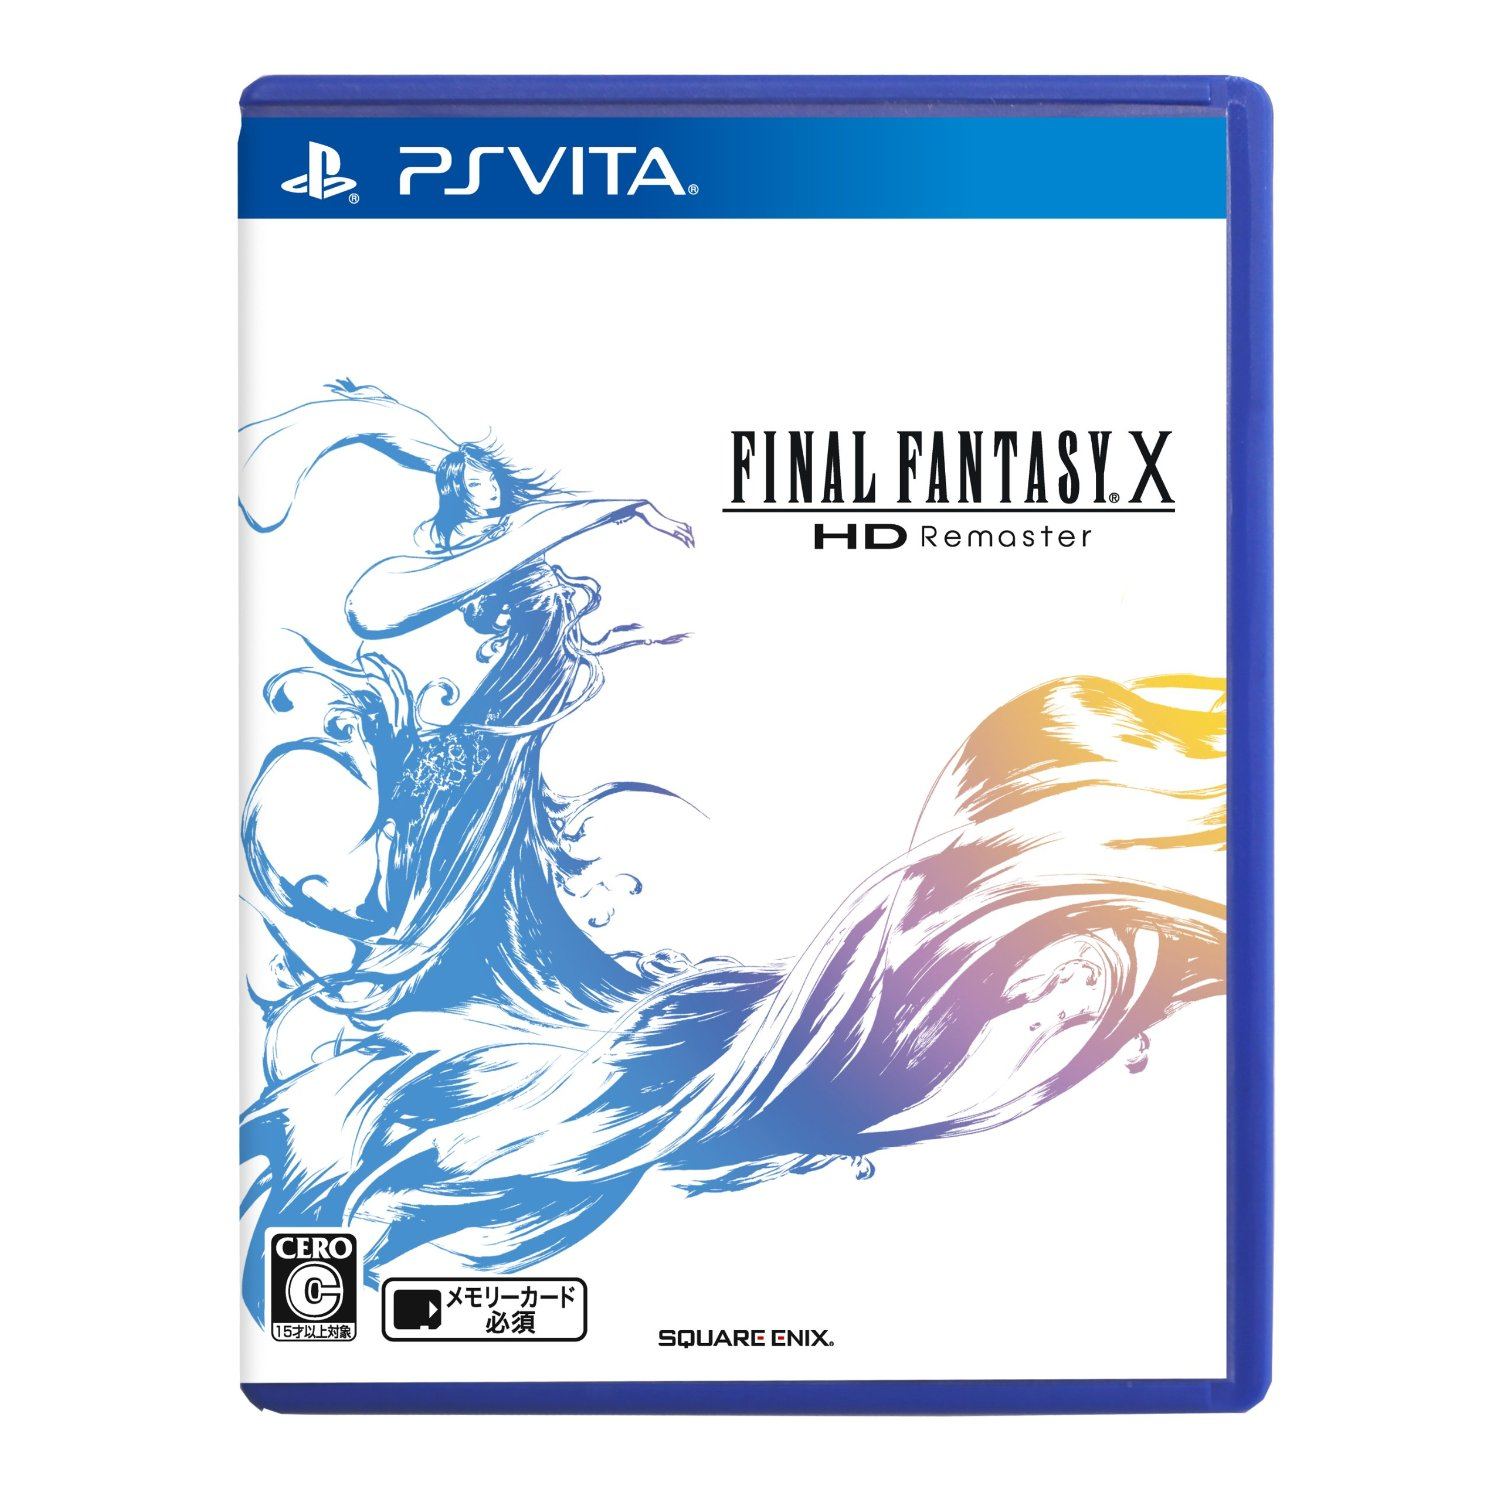 Final Fantasy X HD Remaster for PlayStation Vita